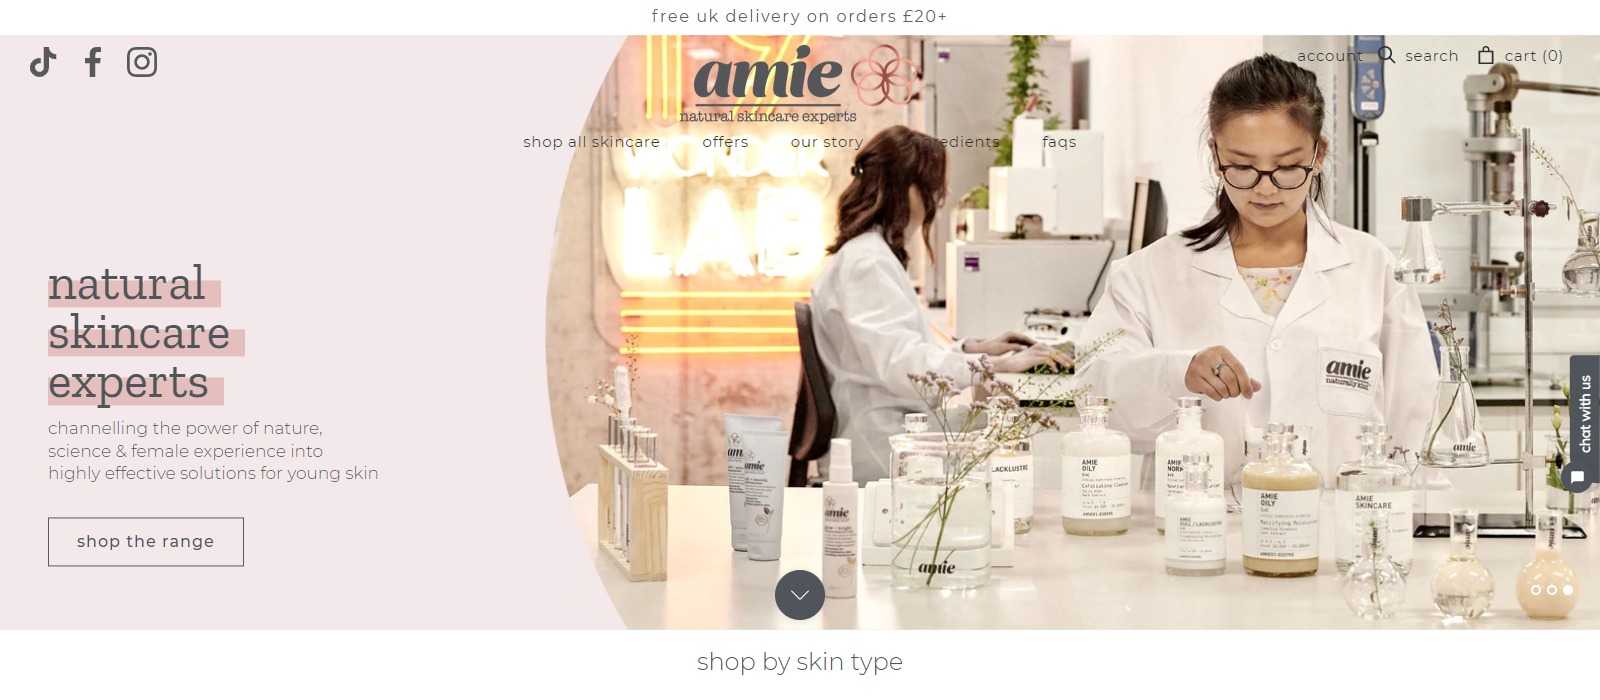 Amie Skincare Affiliates Program Review: Get Earn 4% - 15% Commission Per Sale